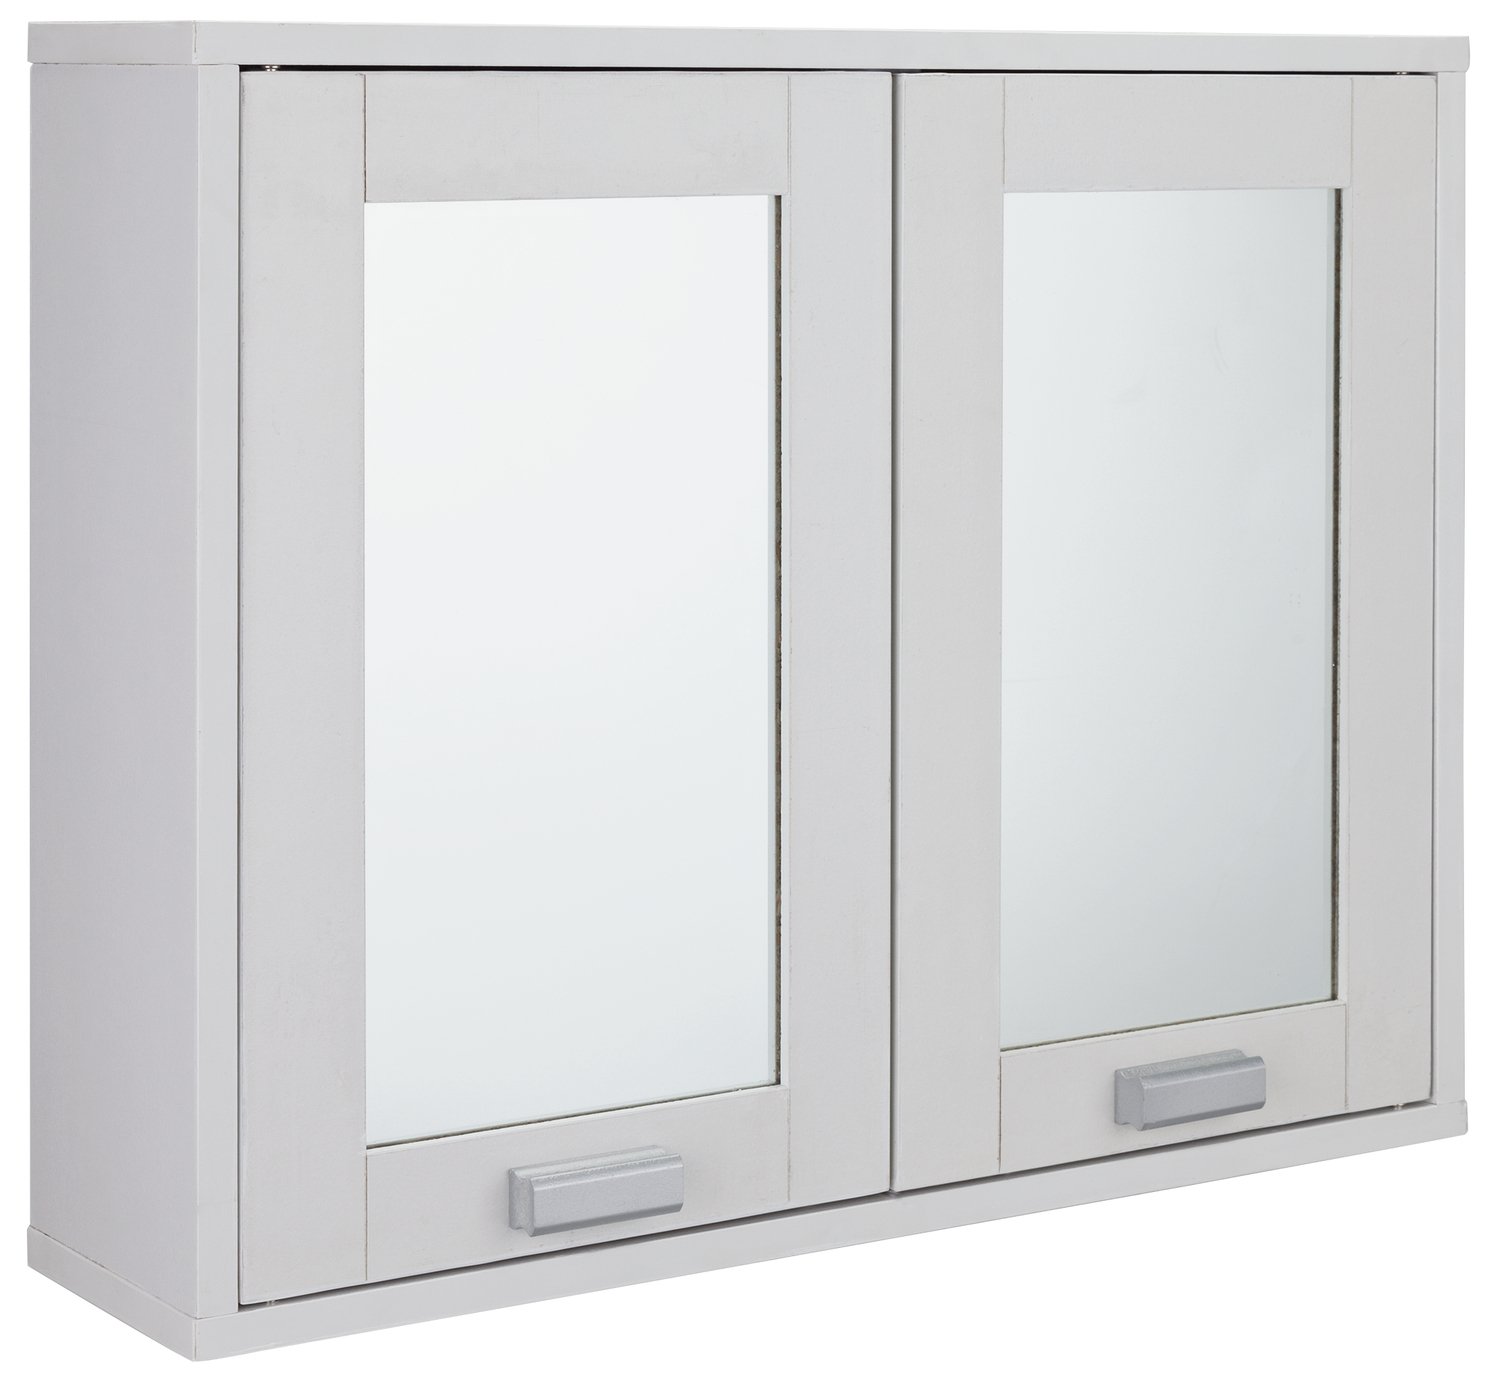 Argos Home Prime 2 Door Mirrored Cabinet Reviews